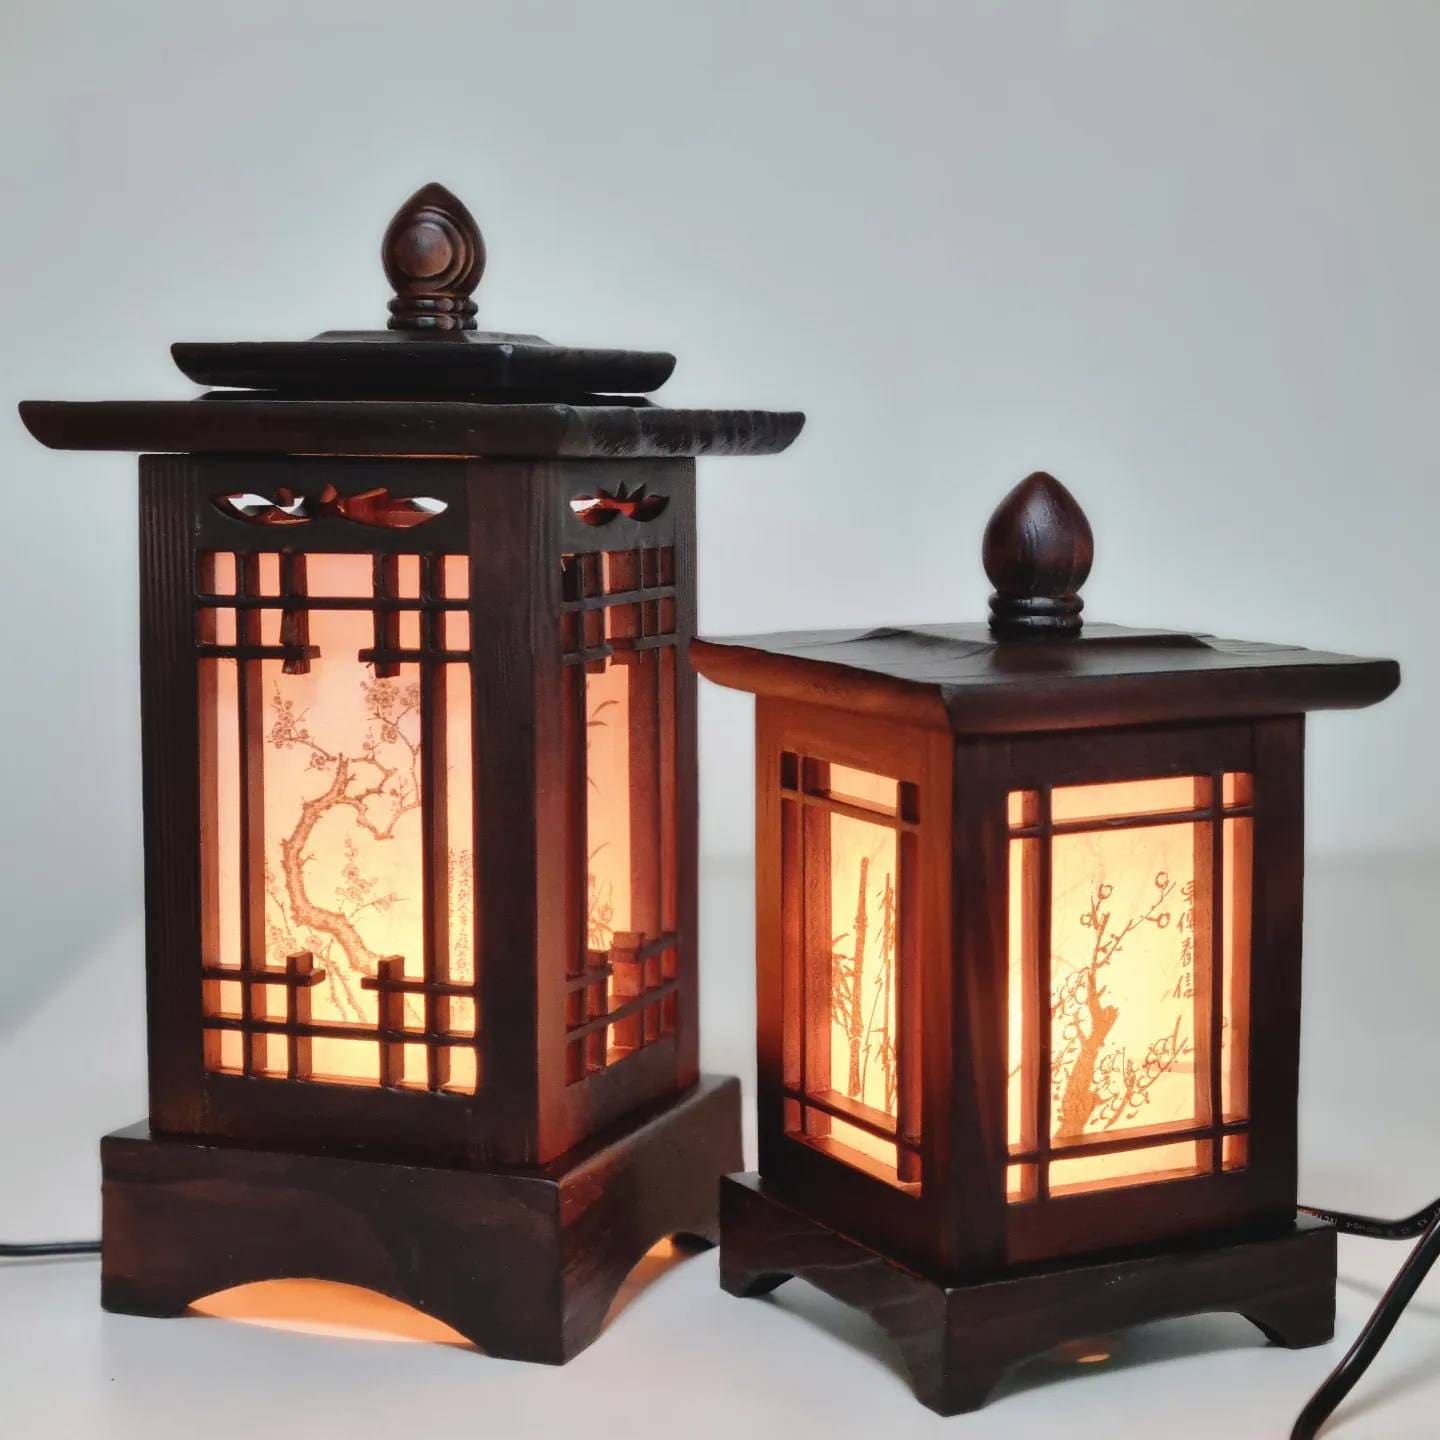  Korean traditional pattern wooden light/Wood lamp